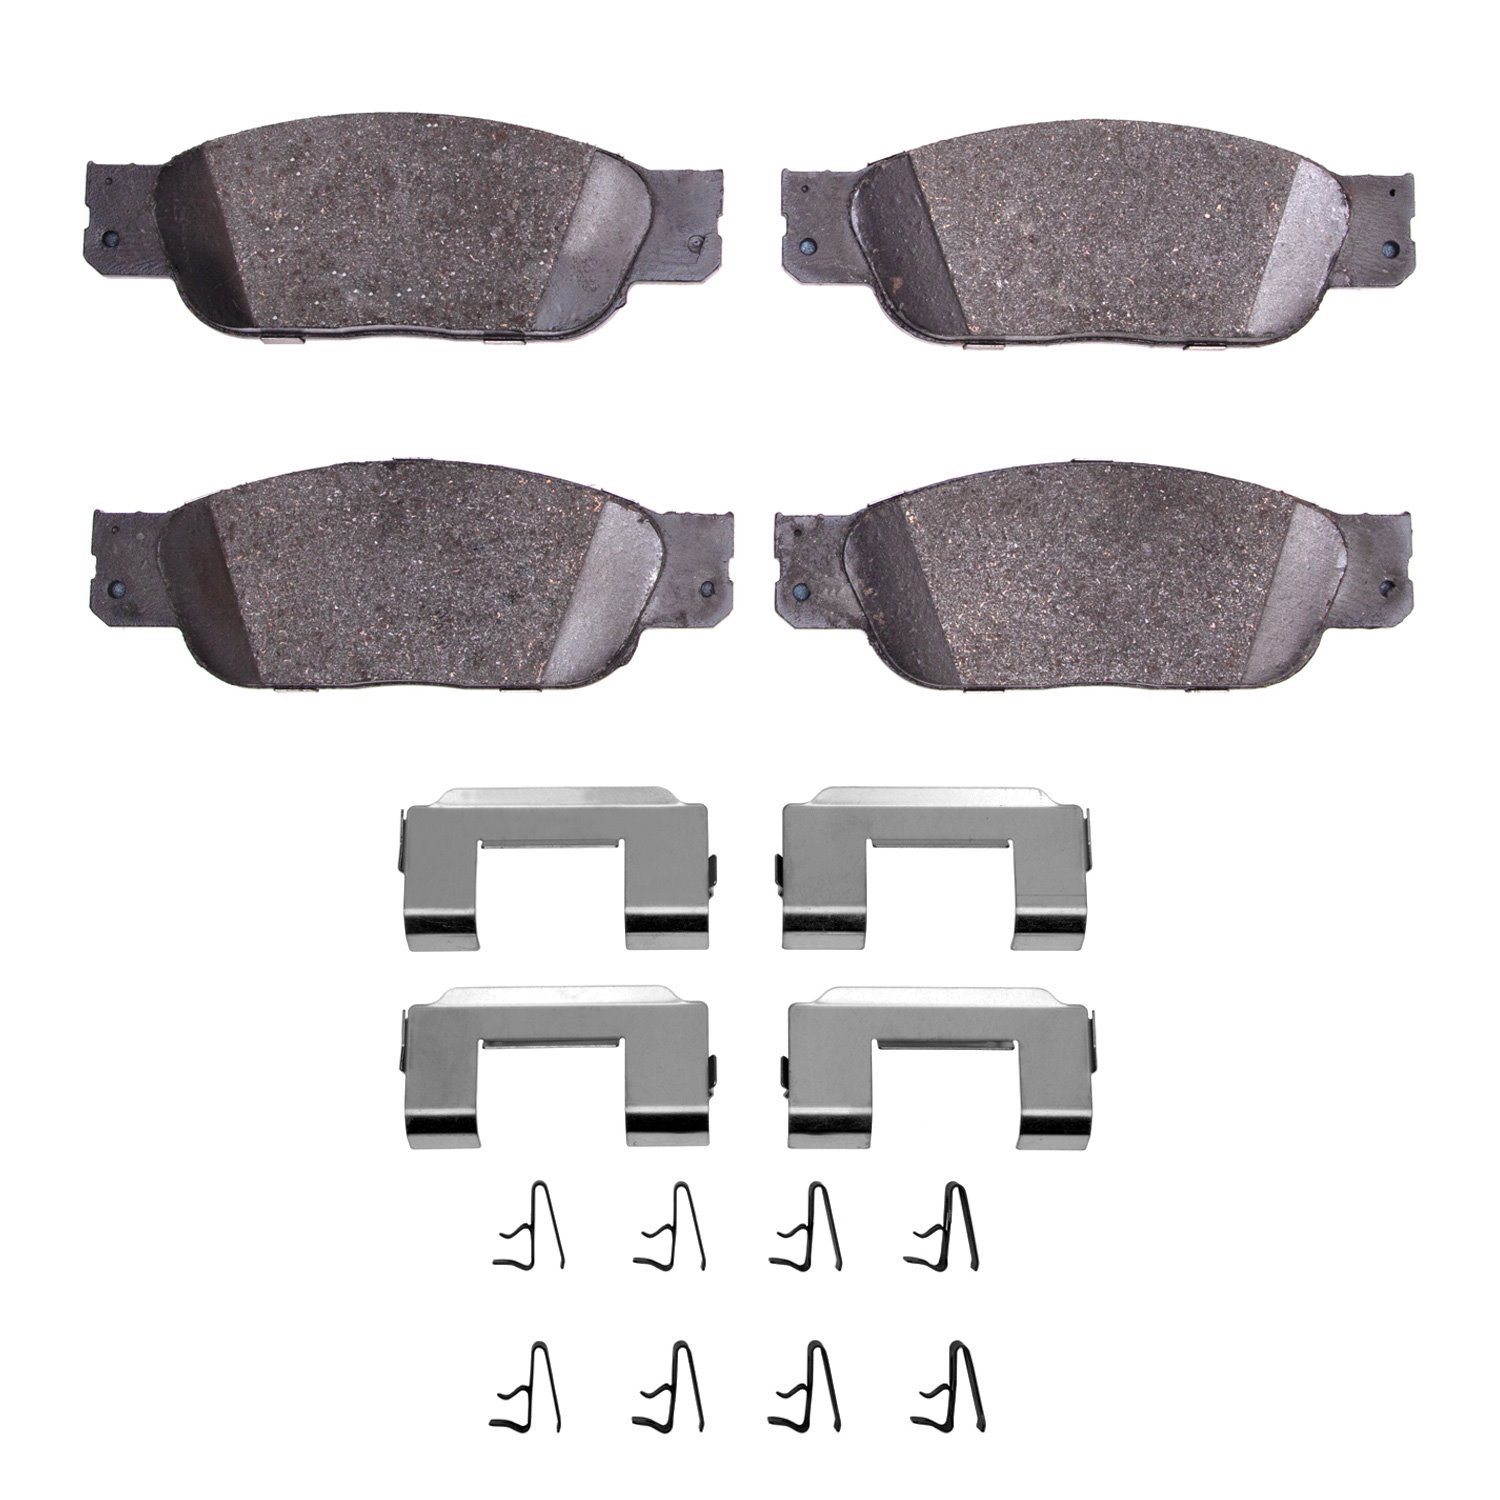 1310-0805-01 3000-Series Ceramic Brake Pads & Hardware Kit, 2000-2006 Multiple Makes/Models, Position: Front